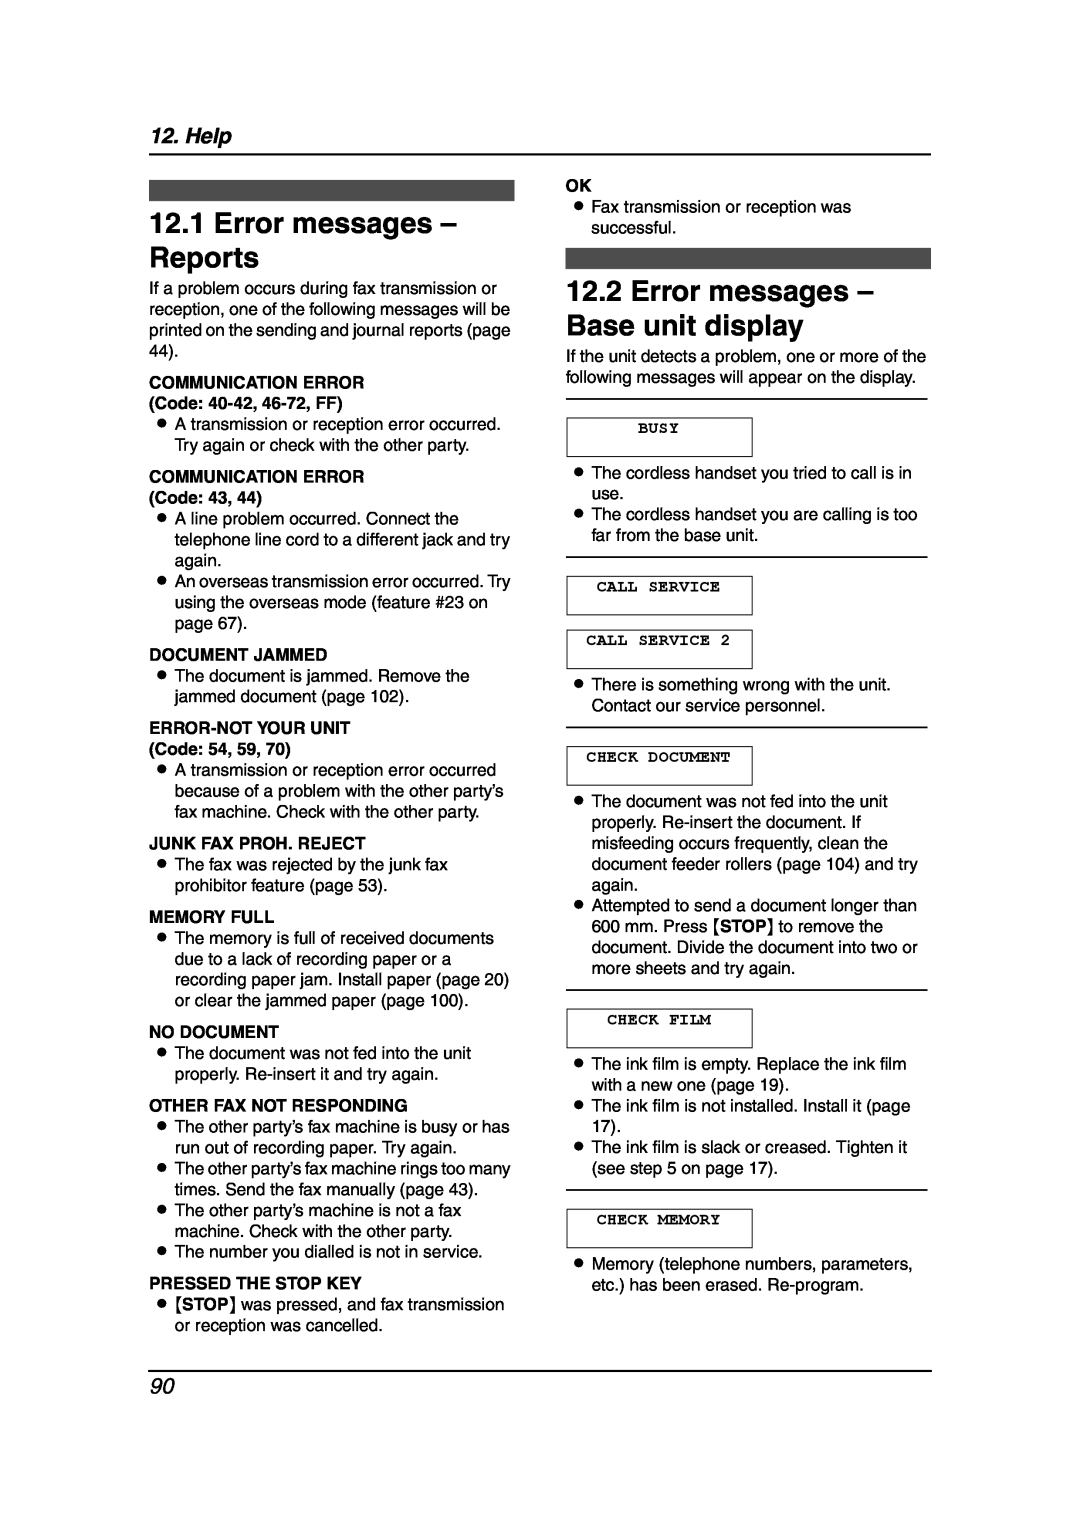 Panasonic KX-FC241AL manual Error messages - Reports, Error messages - Base unit display, Help, COMMUNICATION ERROR Code 43 